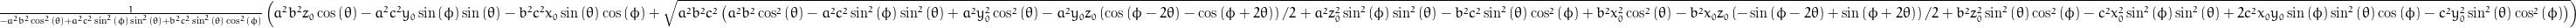 \frac{1}{- a^{2} b^{2} \cos^{2}{\left (\theta \right )} + a^{2} c^{2} \sin^{2}{\left (\phi \right )} \sin^{2}{\left (\theta \right )} + b^{2} c^{2} \sin^{2}{\left (\theta \right )} \cos^{2}{\left (\phi \right )}} \left(a^{2} b^{2} z_{0} \cos{\left (\theta \right )} - a^{2} c^{2} y_{0} \sin{\left (\phi \right )} \sin{\left (\theta \right )} - b^{2} c^{2} x_{0} \sin{\left (\theta \right )} \cos{\left (\phi \right )} + \sqrt{a^{2} b^{2} c^{2} \left(a^{2} b^{2} \cos^{2}{\left (\theta \right )} - a^{2} c^{2} \sin^{2}{\left (\phi \right )} \sin^{2}{\left (\theta \right )} + a^{2} y_{0}^{2} \cos^{2}{\left (\theta \right )} - \frac{y_{0} z_{0}}{2} a^{2} \left(\cos{\left (\phi - 2 \theta \right )} - \cos{\left (\phi + 2 \theta \right )}\right) + a^{2} z_{0}^{2} \sin^{2}{\left (\phi \right )} \sin^{2}{\left (\theta \right )} - b^{2} c^{2} \sin^{2}{\left (\theta \right )} \cos^{2}{\left (\phi \right )} + b^{2} x_{0}^{2} \cos^{2}{\left (\theta \right )} - \frac{x_{0} z_{0}}{2} b^{2} \left(- \sin{\left (\phi - 2 \theta \right )} + \sin{\left (\phi + 2 \theta \right )}\right) + b^{2} z_{0}^{2} \sin^{2}{\left (\theta \right )} \cos^{2}{\left (\phi \right )} - c^{2} x_{0}^{2} \sin^{2}{\left (\phi \right )} \sin^{2}{\left (\theta \right )} + 2 c^{2} x_{0} y_{0} \sin{\left (\phi \right )} \sin^{2}{\left (\theta \right )} \cos{\left (\phi \right )} - c^{2} y_{0}^{2} \sin^{2}{\left (\theta \right )} \cos^{2}{\left (\phi \right )}\right)}\right)